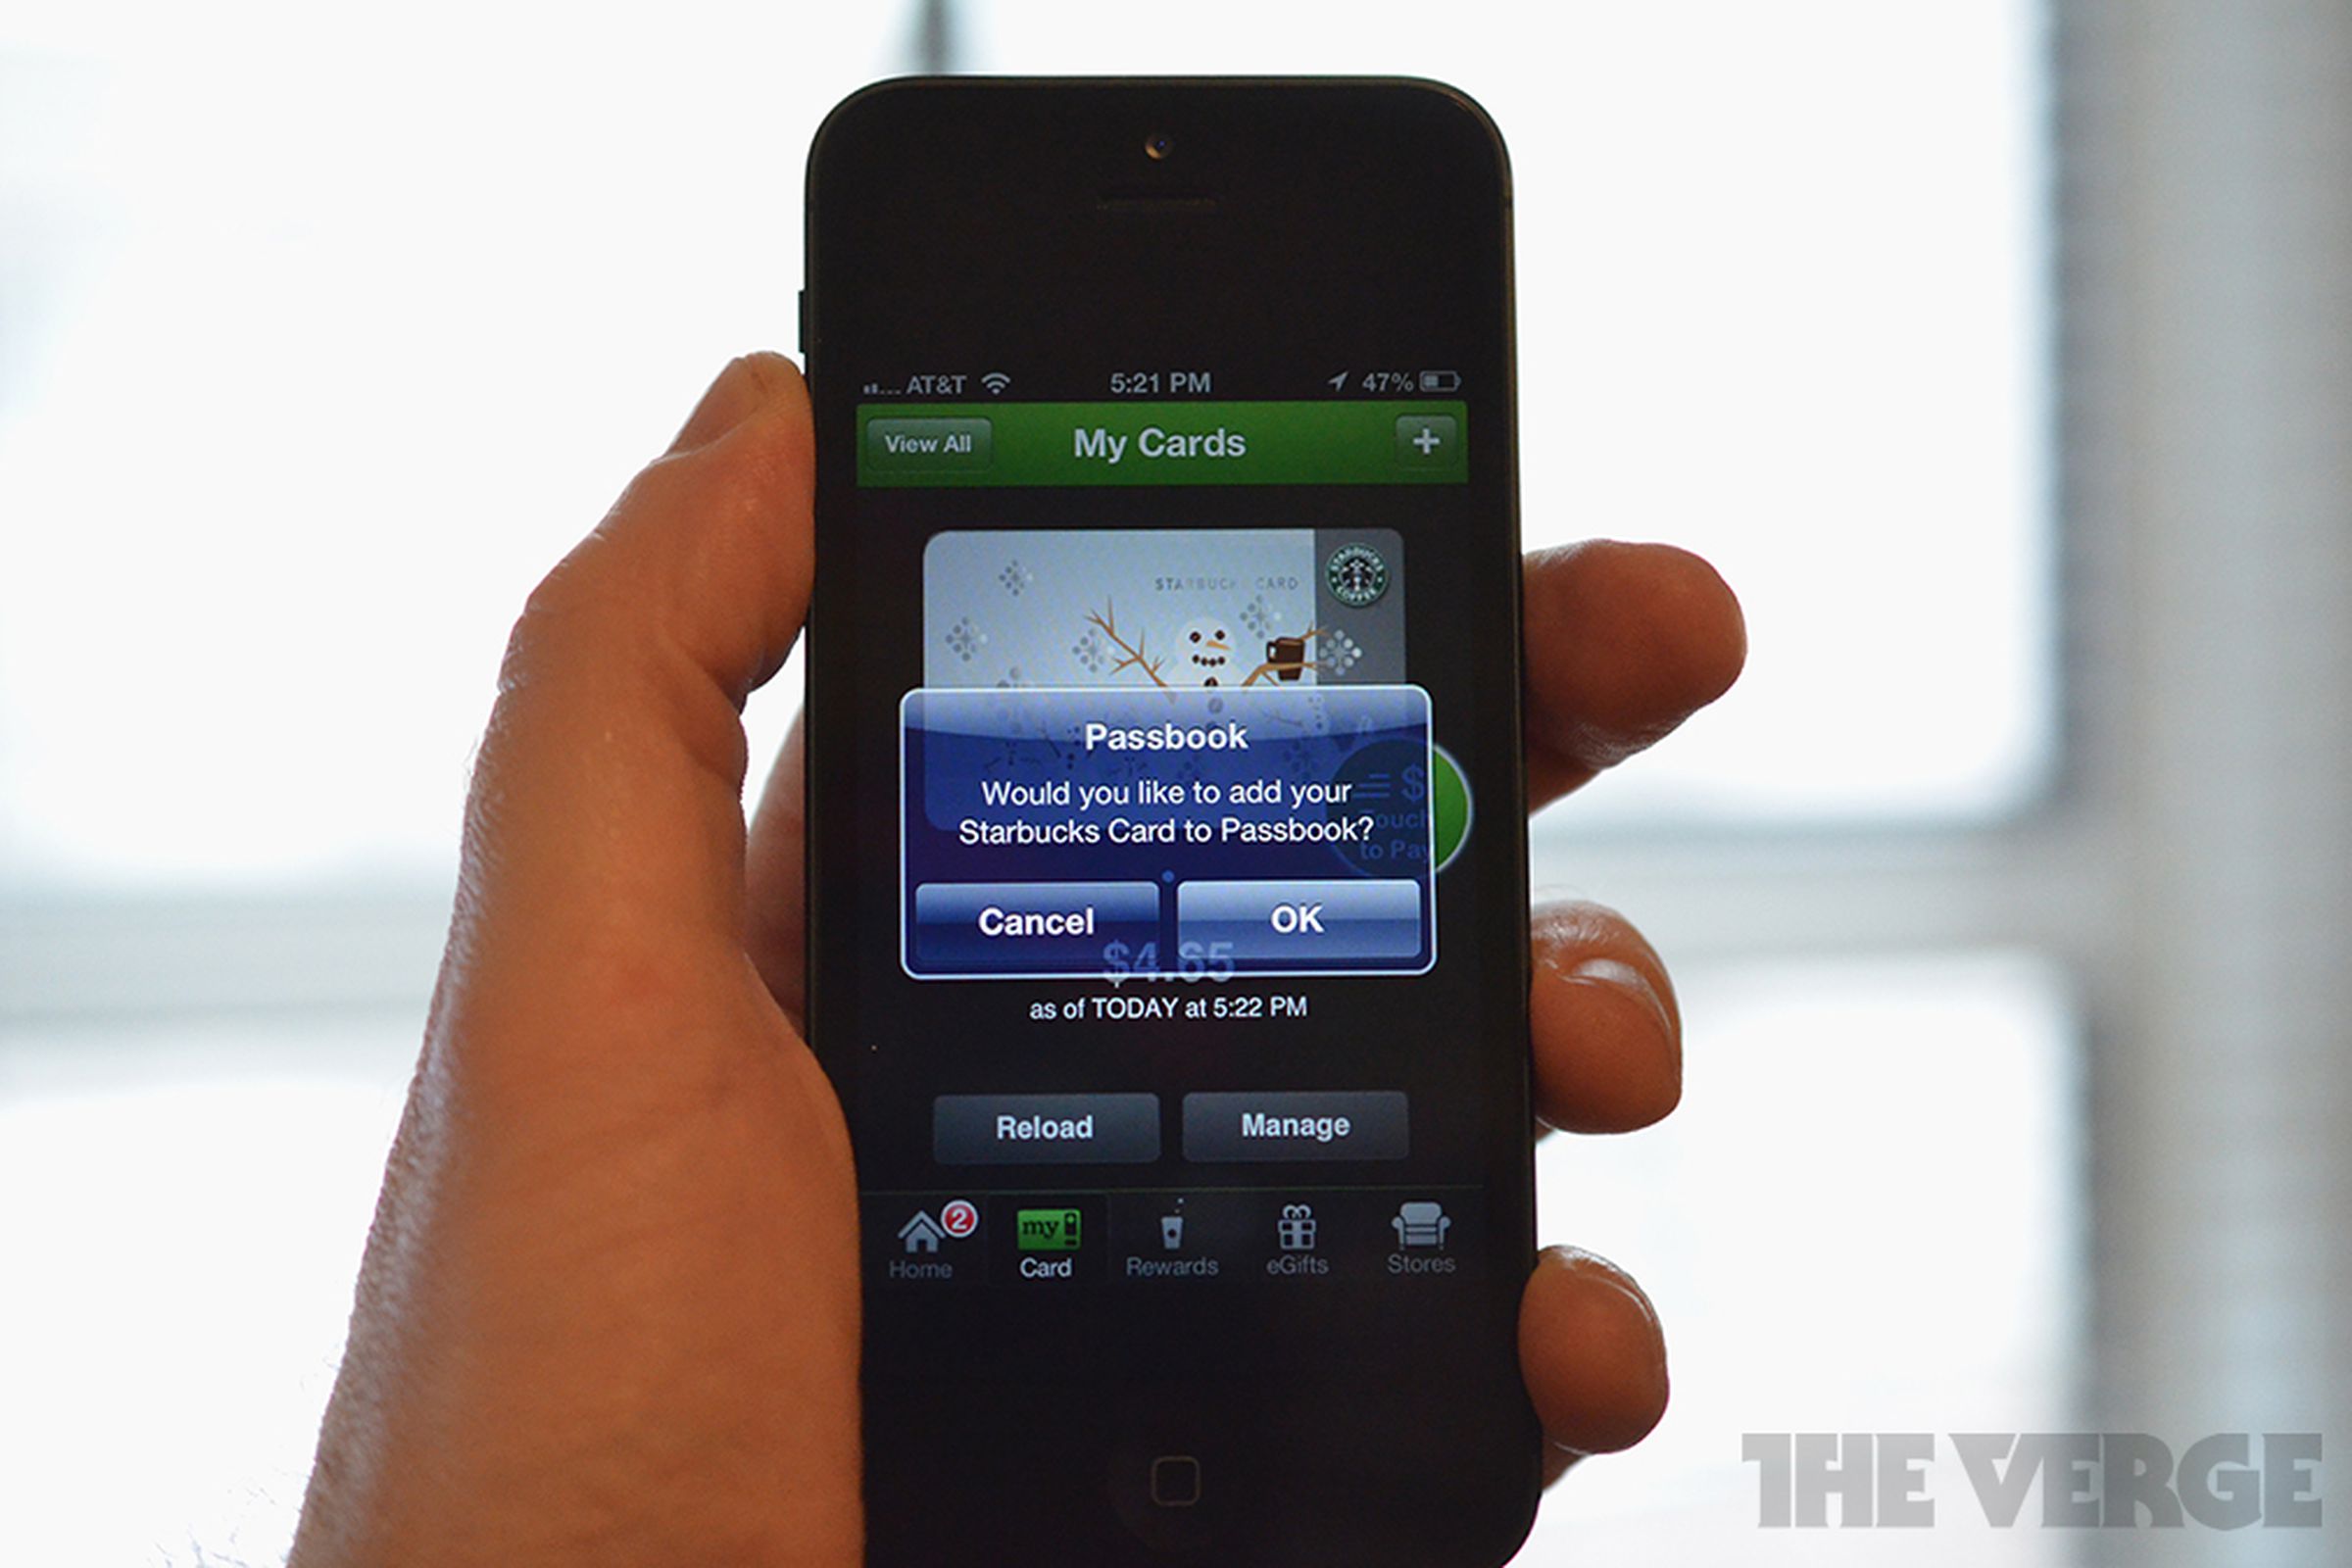 Starbucks iOS app update with Passbook